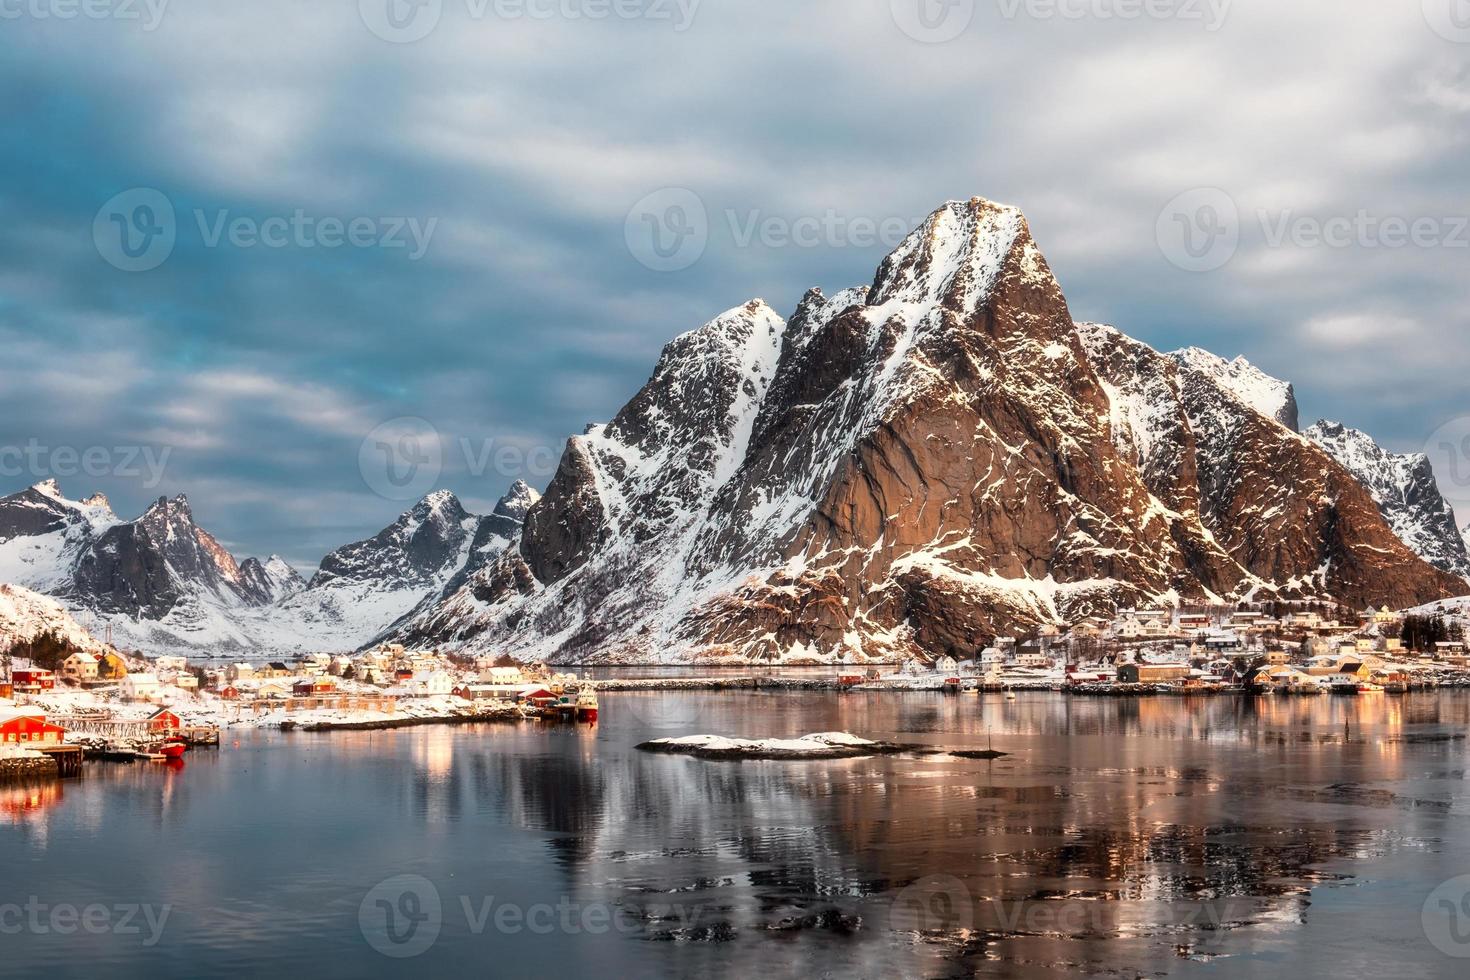 Snow mountain with scandinavian village on arctic ocean in winter photo